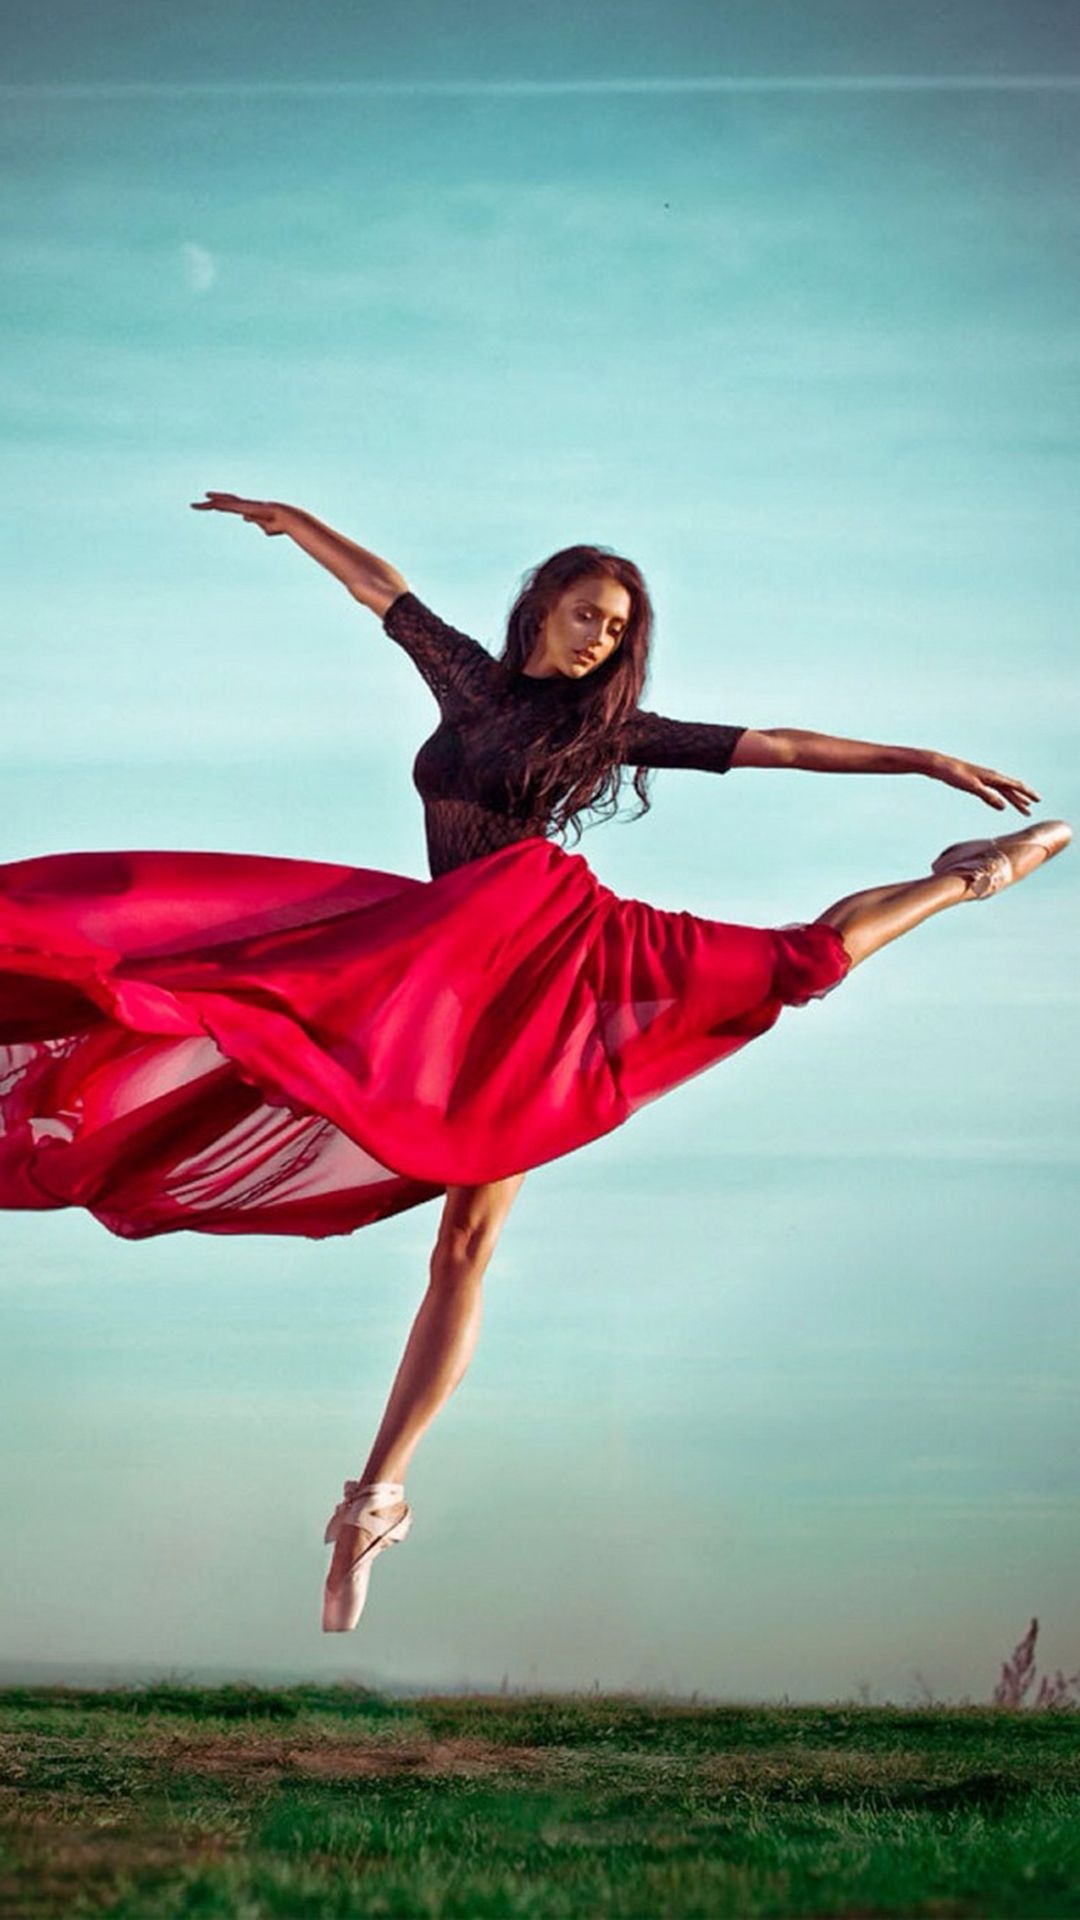 Ballet: Dance move, Soubresaut, A single jump. 1080x1920 Full HD Background.